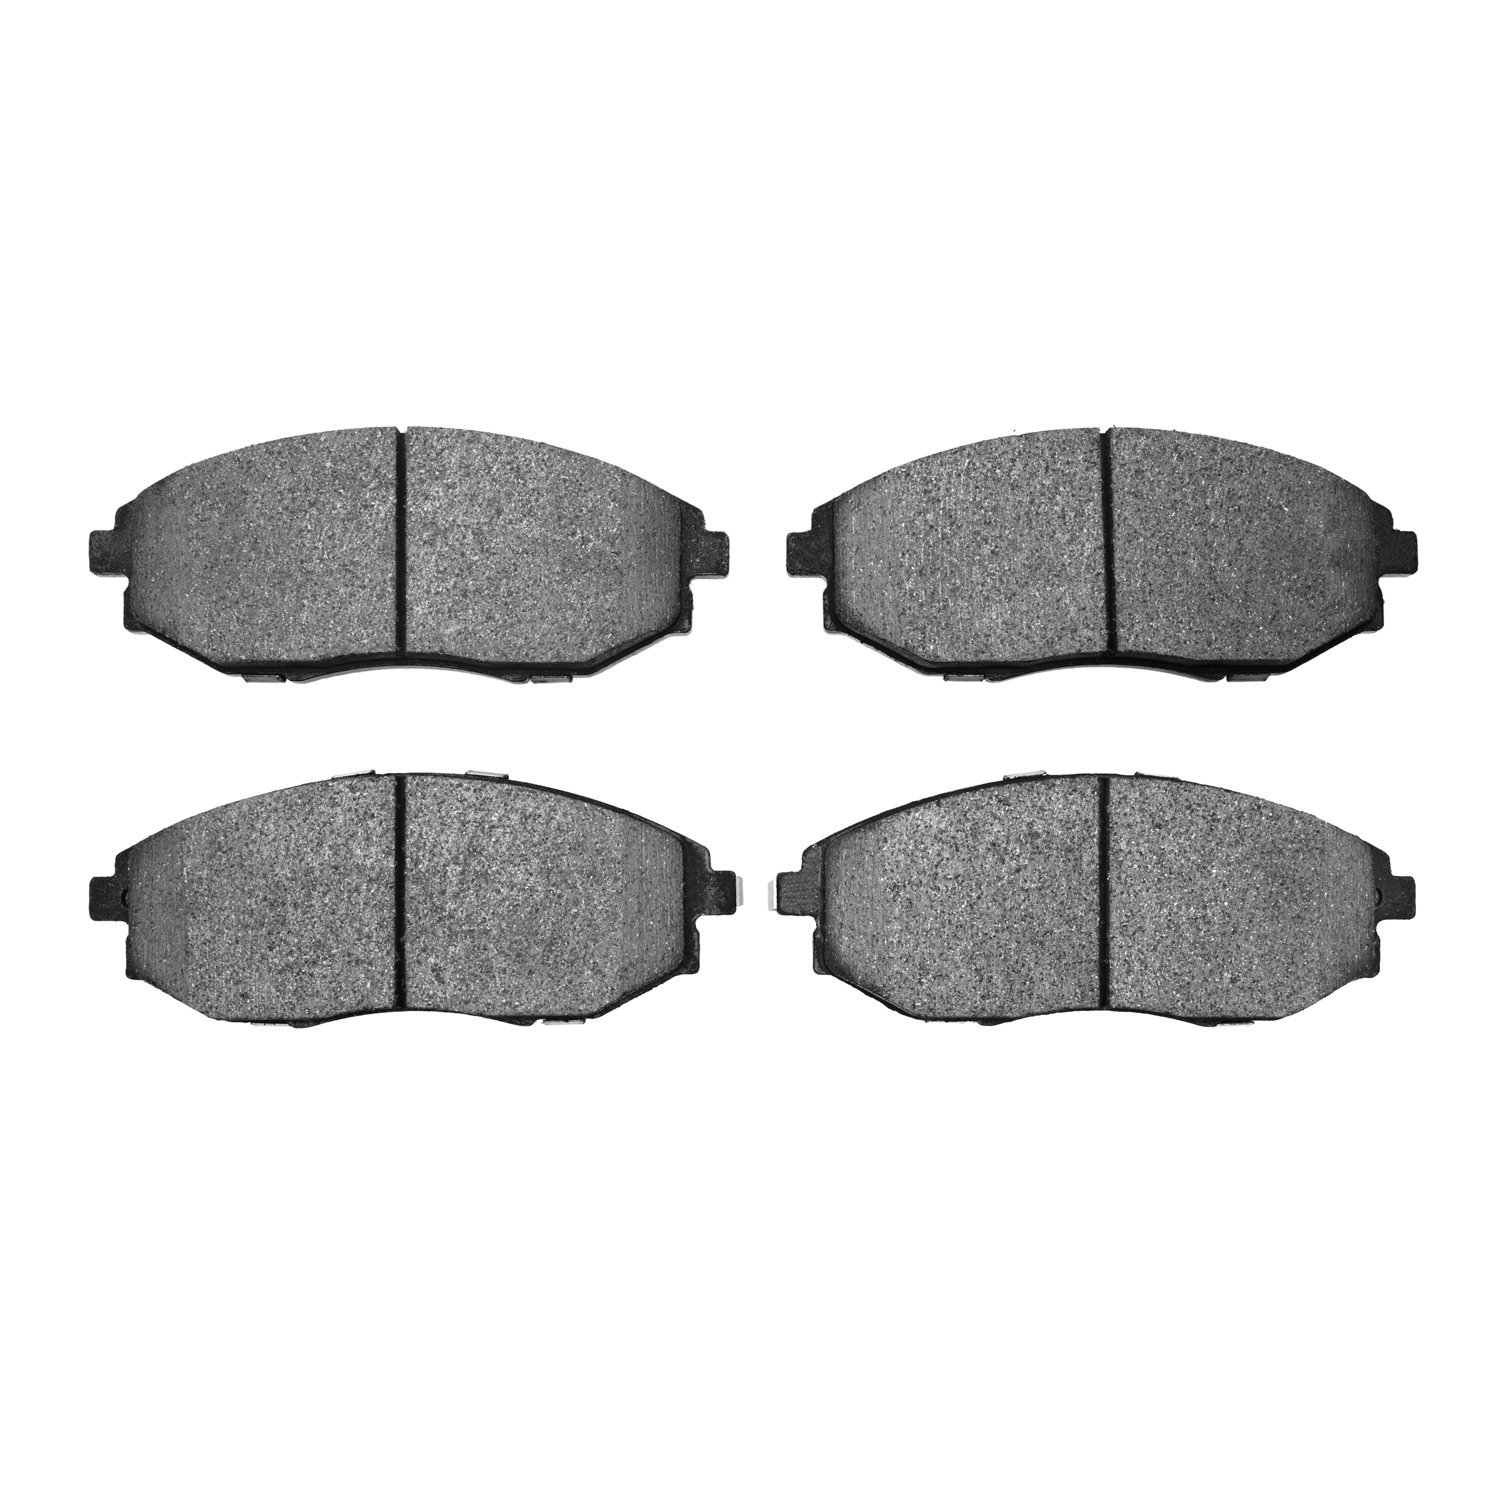 1551-1031-00 5000 Advanced Ceramic Brake Pads, 2004-2010 Multiple Makes/Models, Position: Front